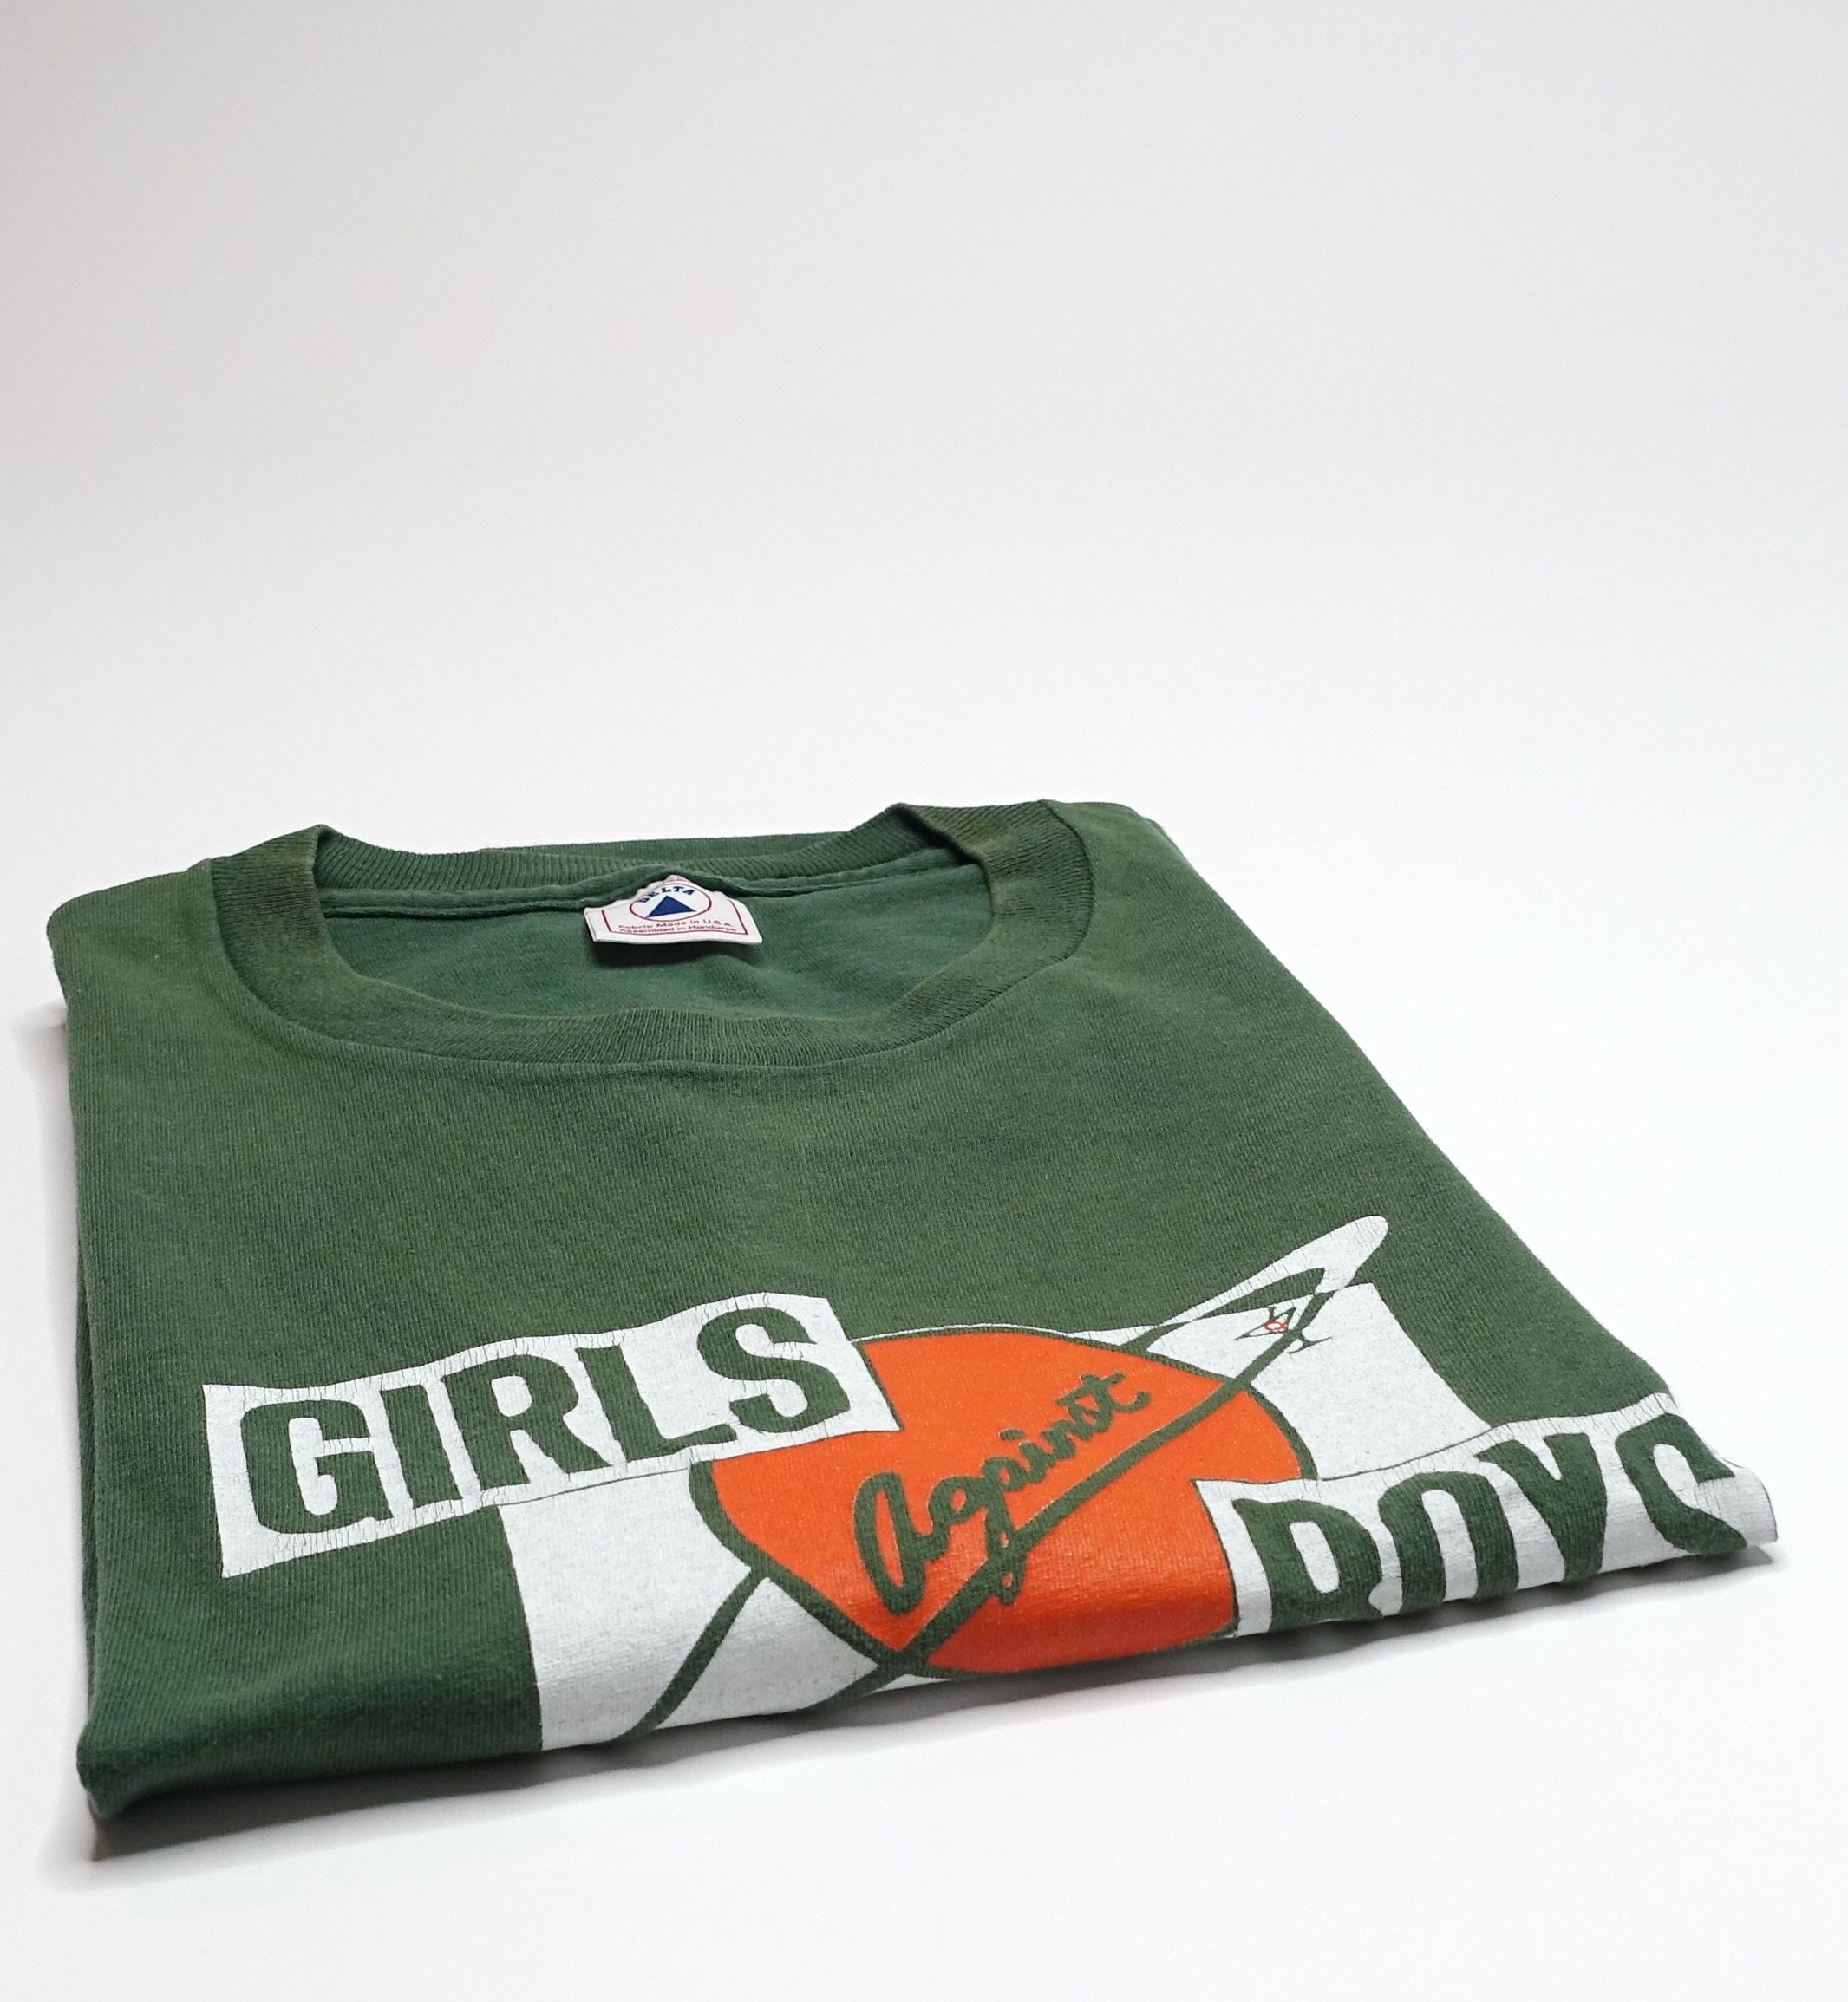 Girls Against Boys – Taste Comfort Class 1995 Tour Shirt Size Large